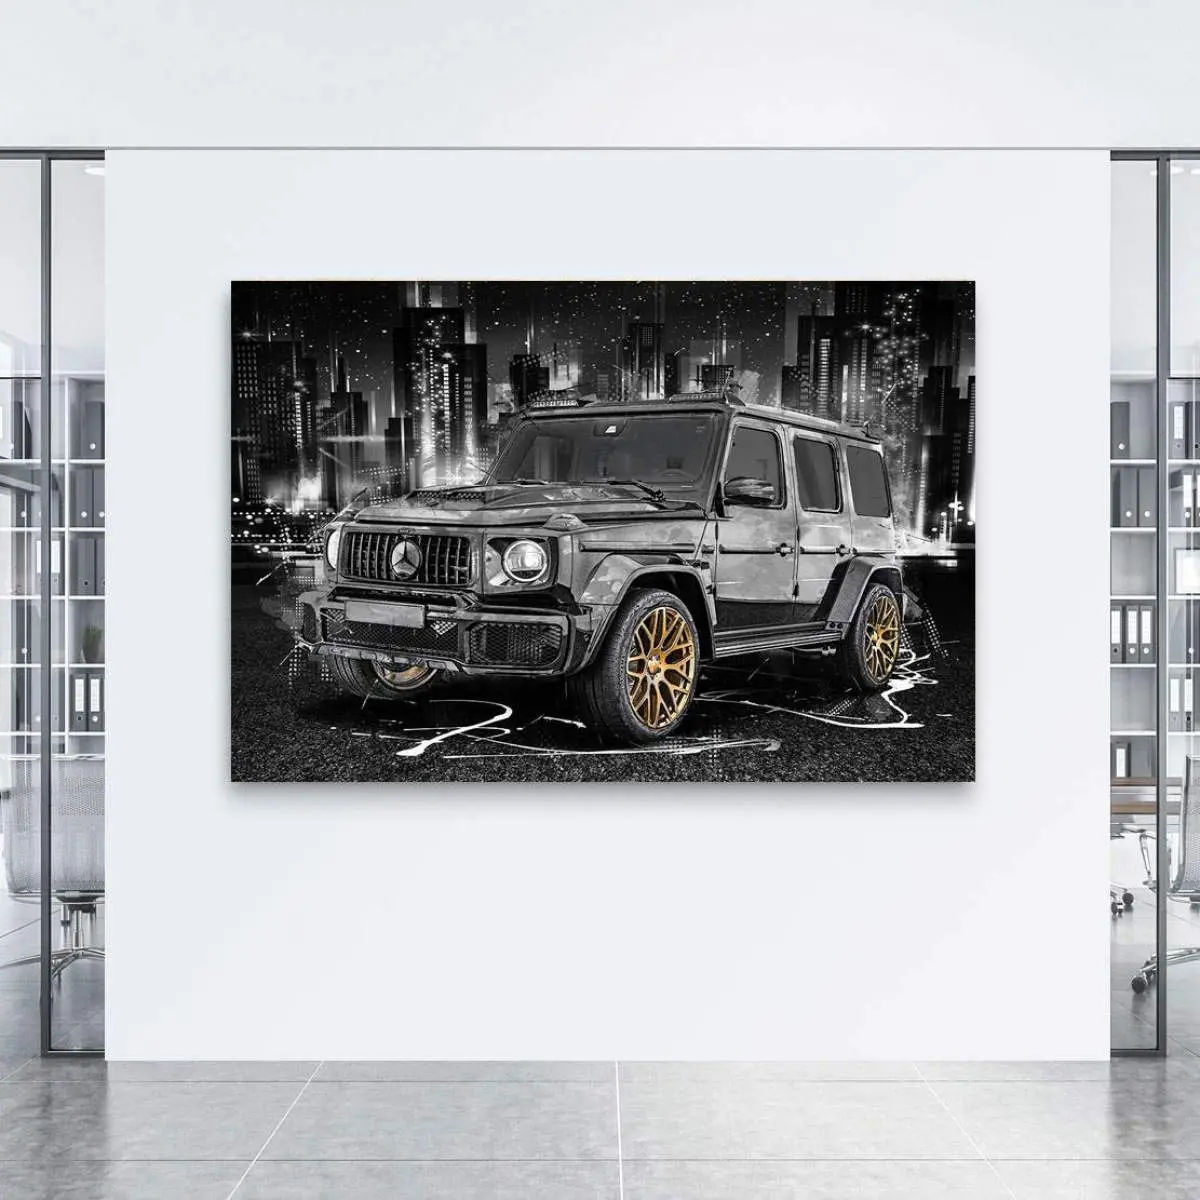 Wandbild Mercedes G63 Kunstgestalten24